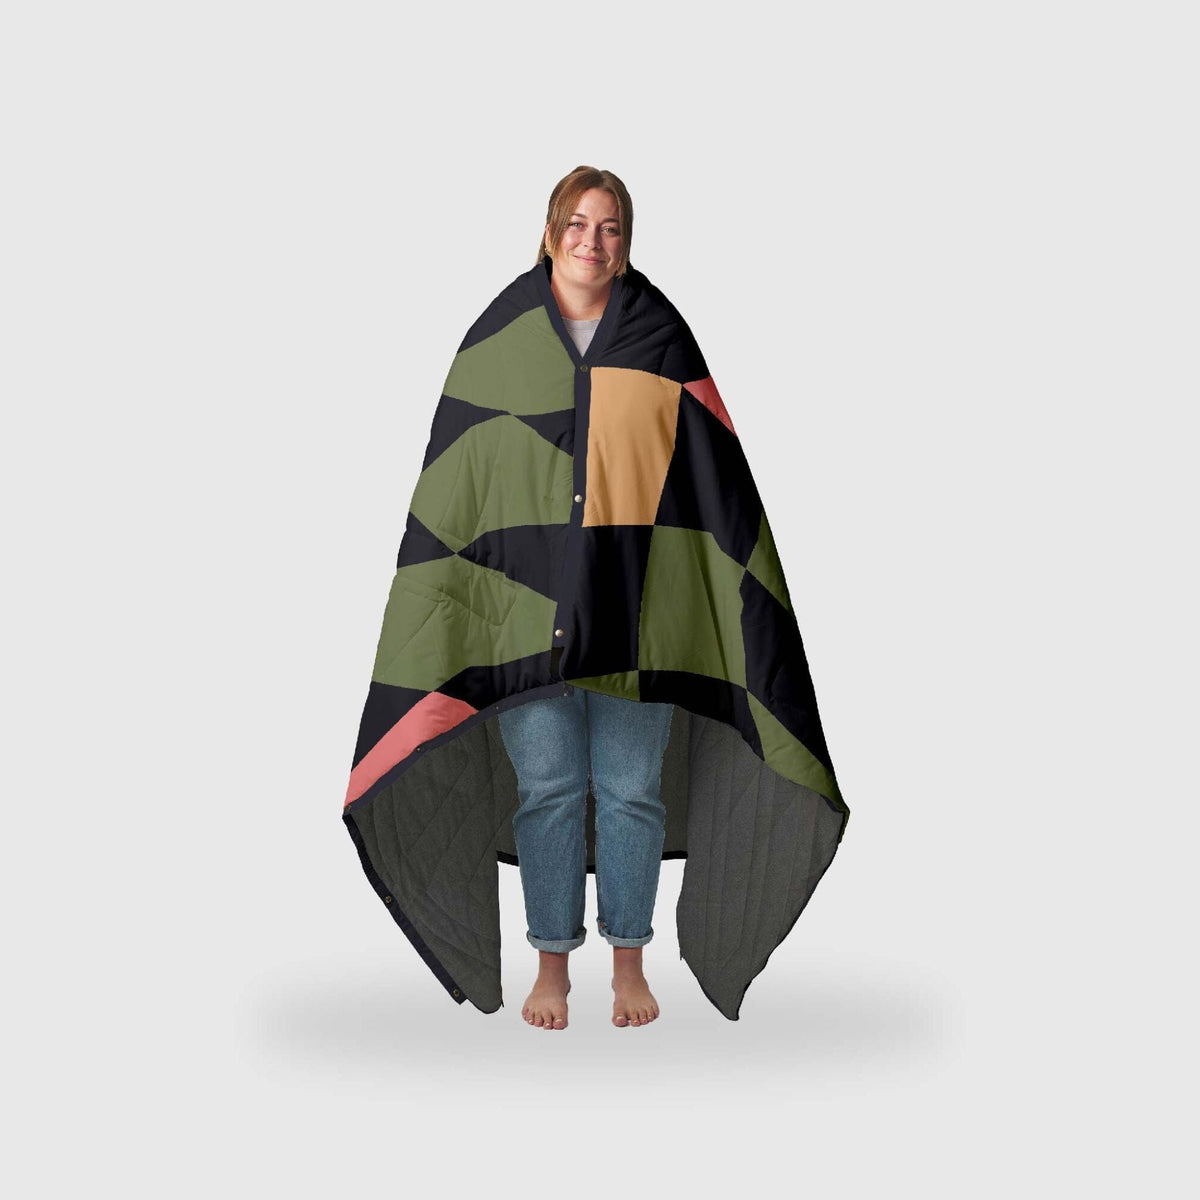 VOITED Fleece Outdoor Camping Blanket - Wavecheck Blankets VOITED 